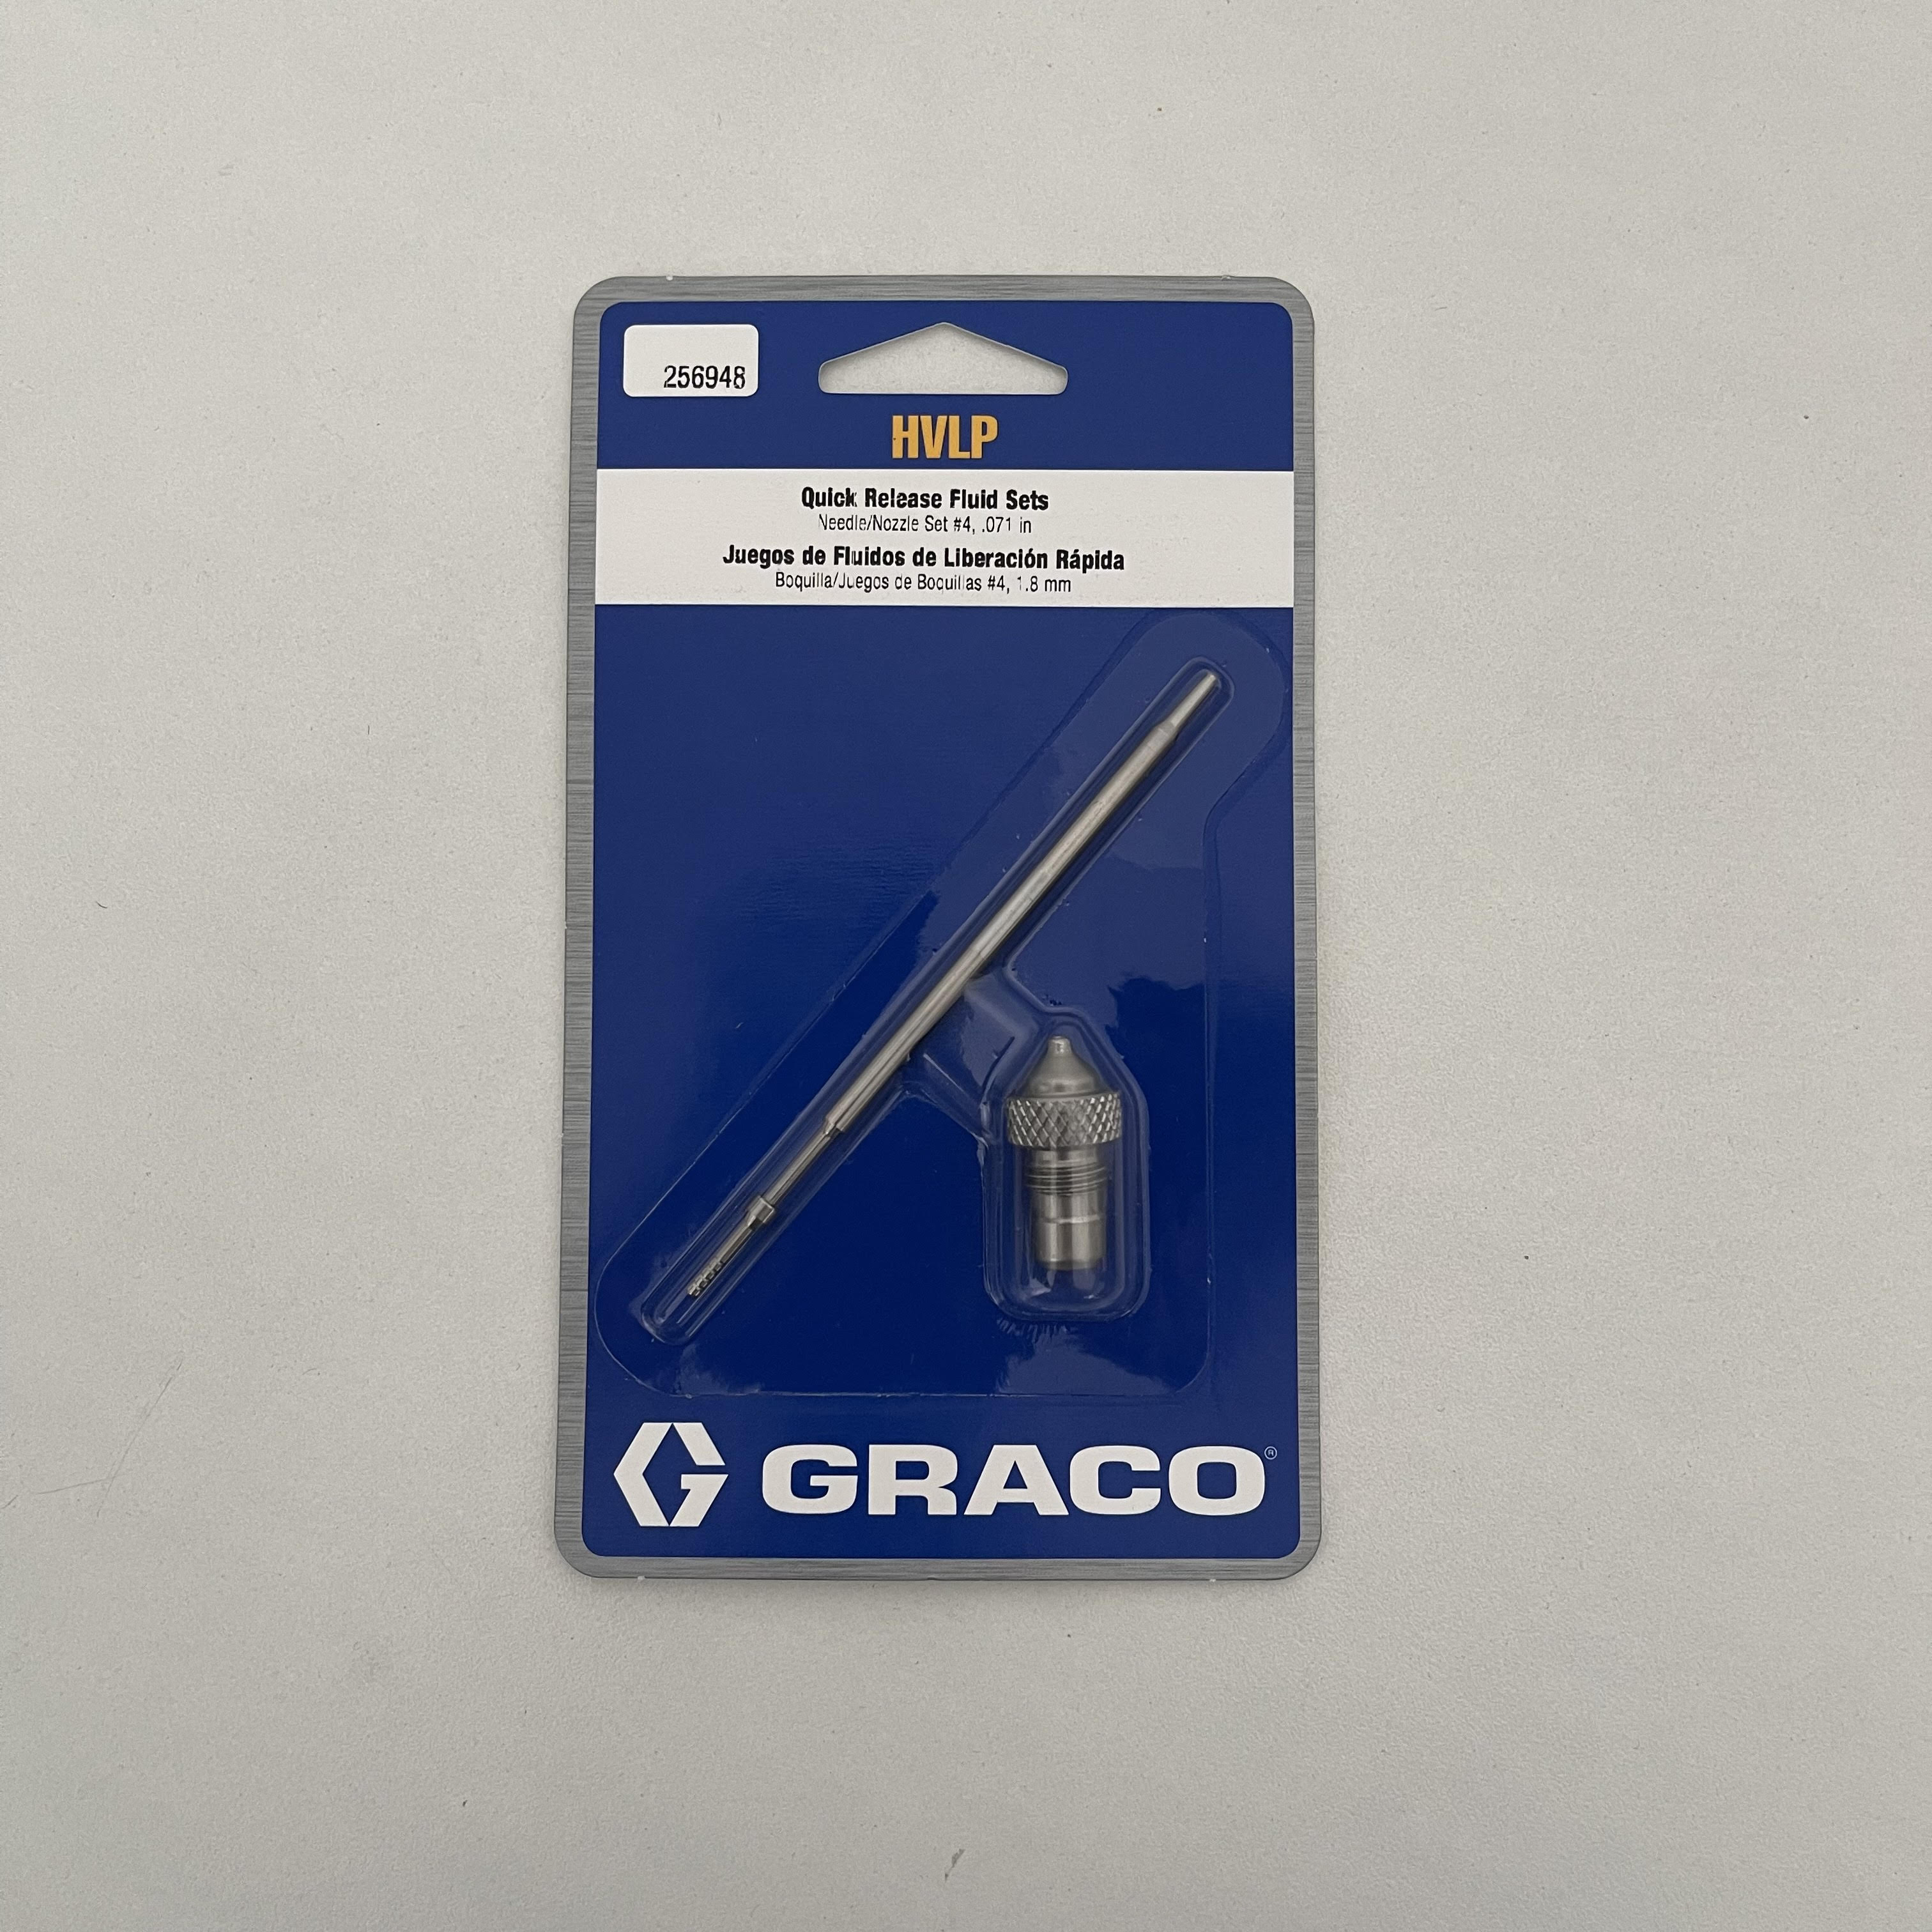 GRACO Original Nadel/Düsen Satz 1.8 mm - 256948